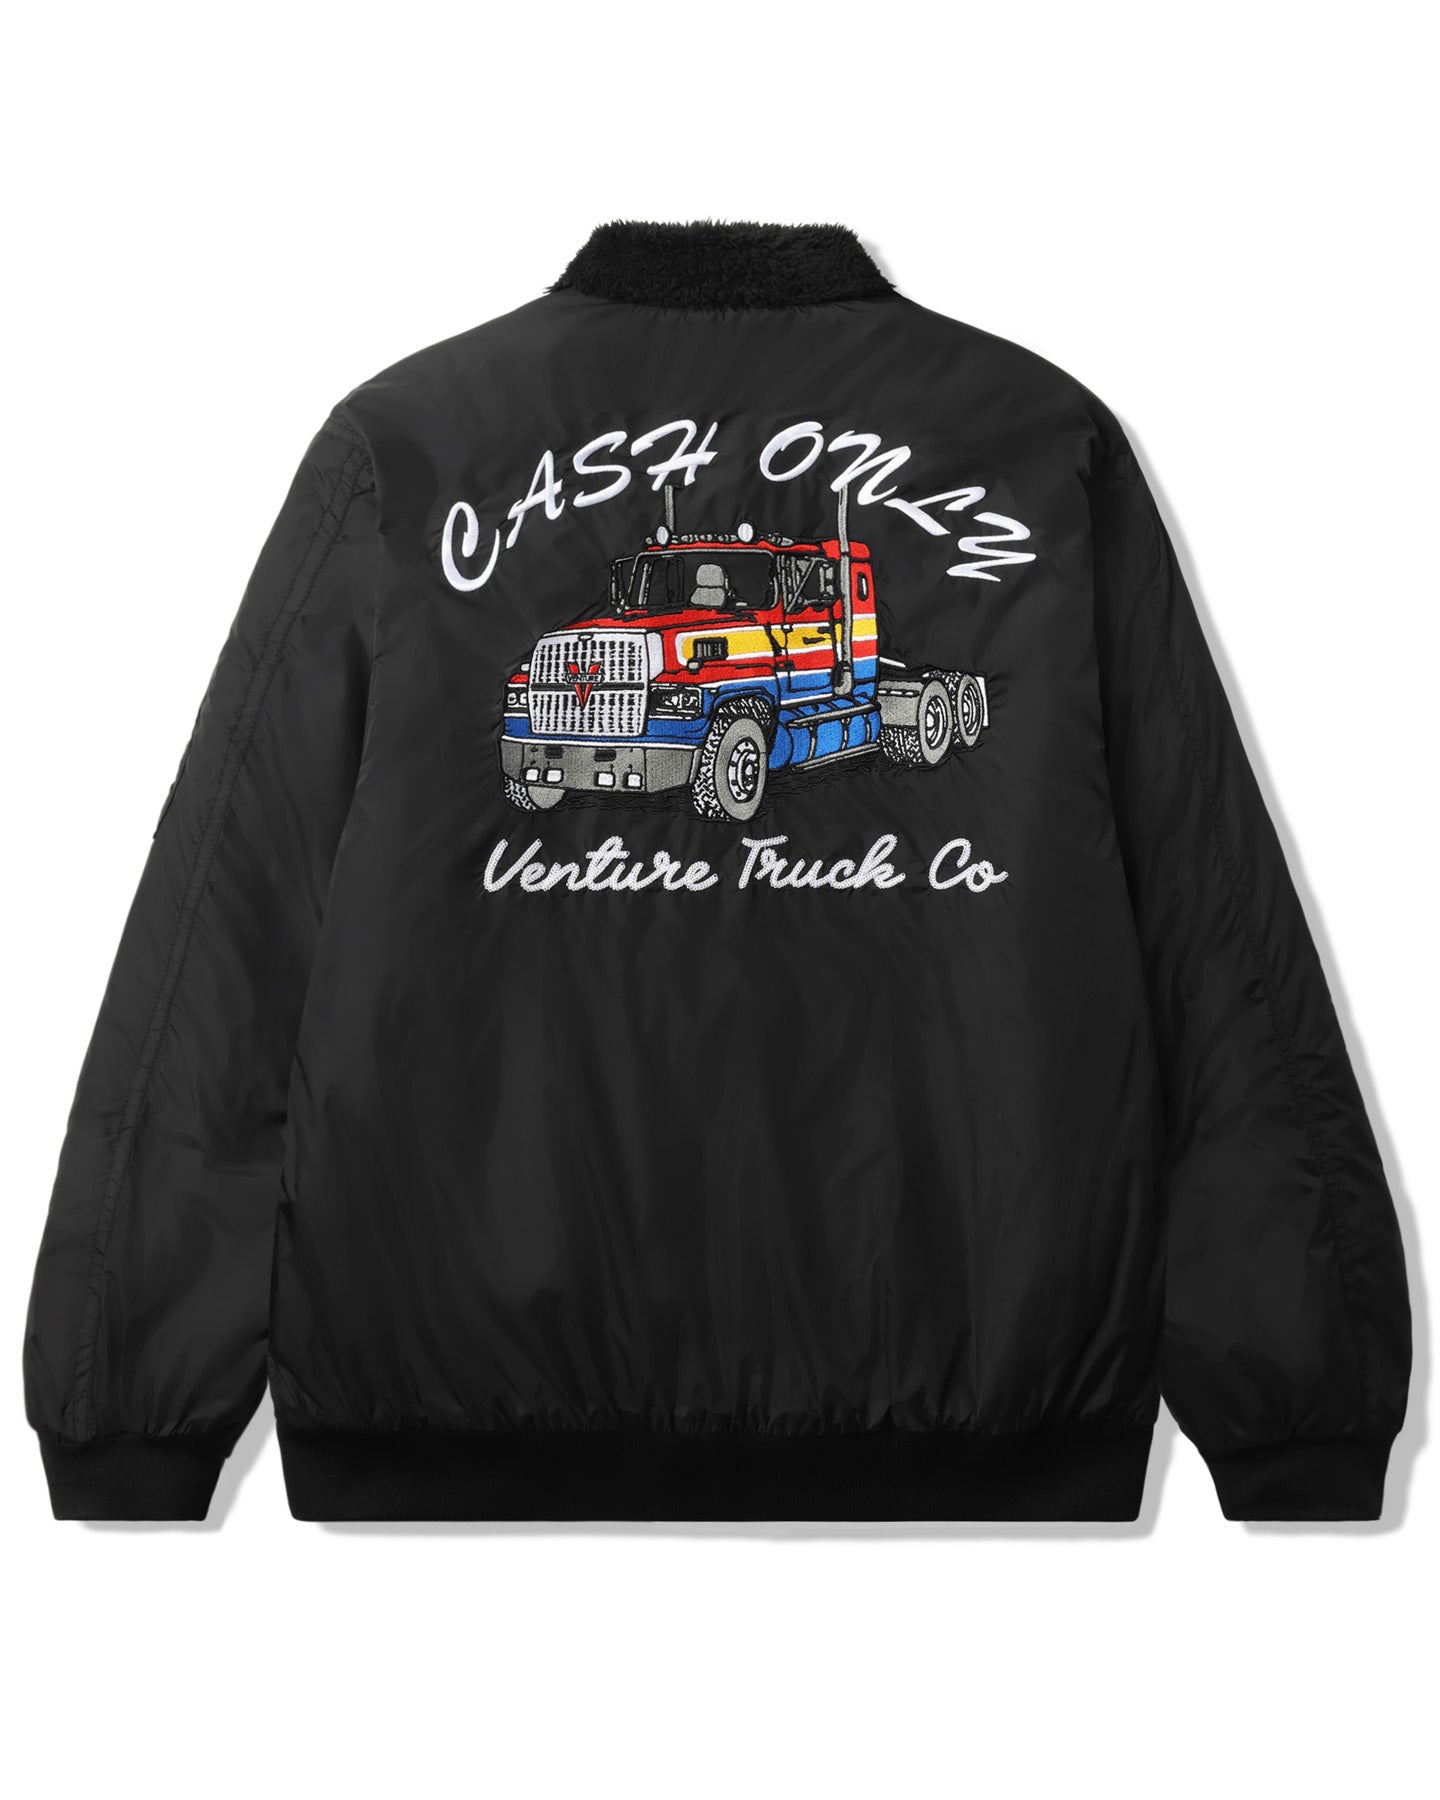 Cash Only Trucker Jacket - Black